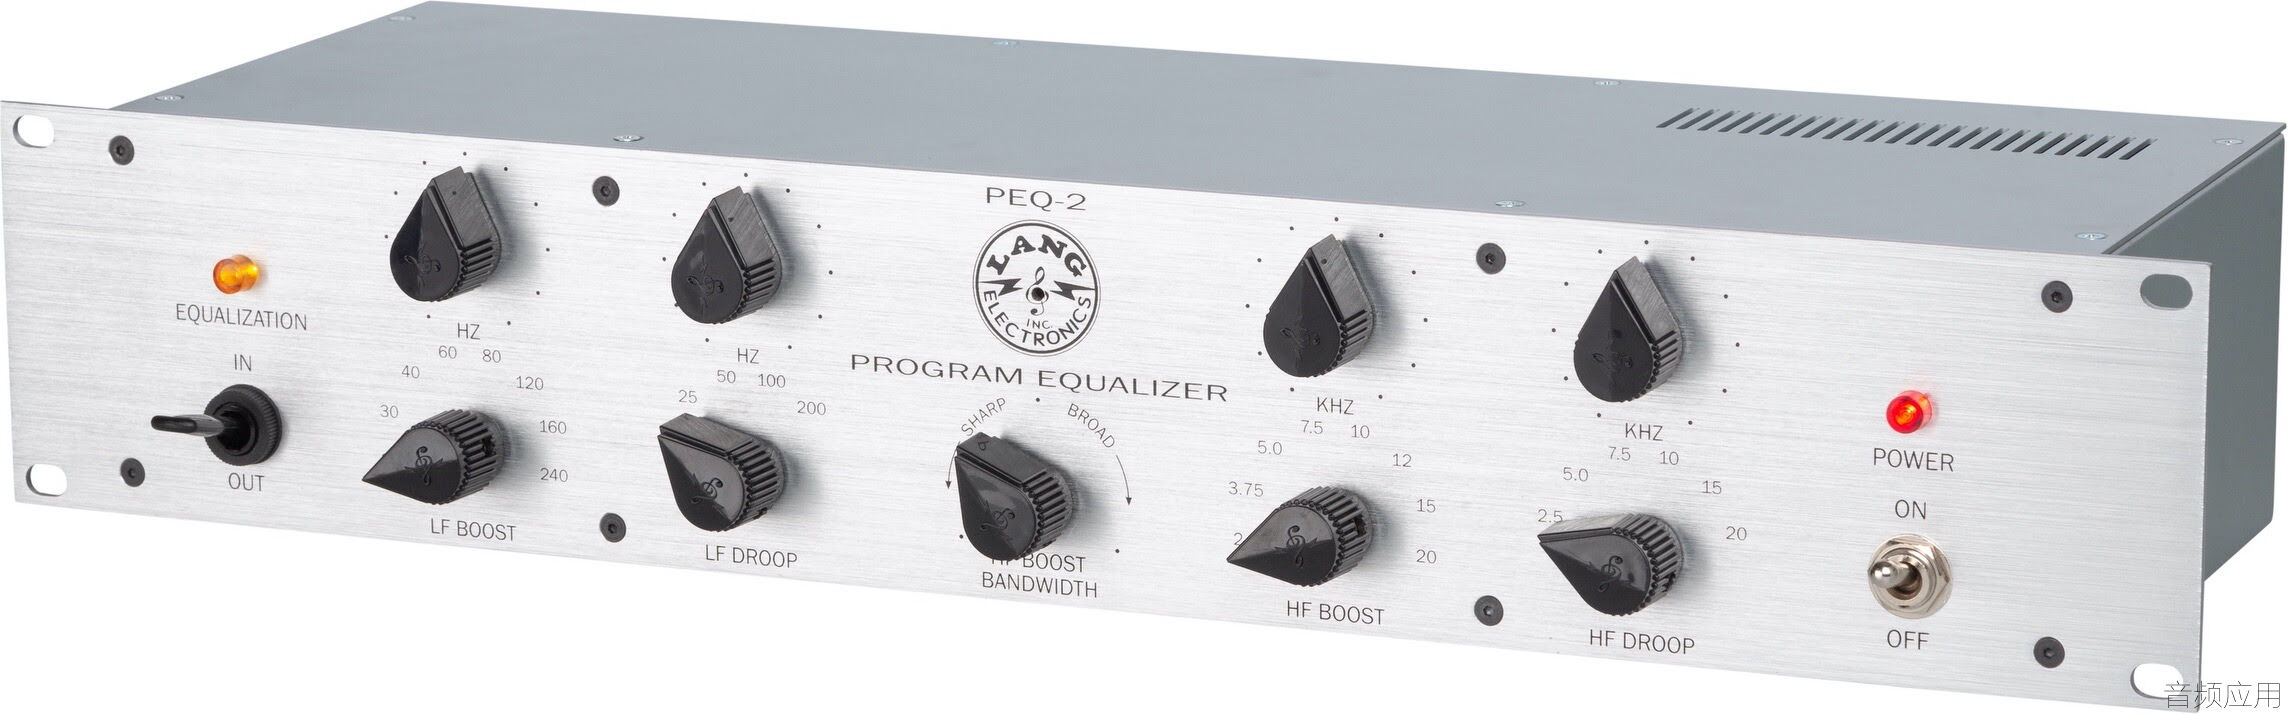 1053094d1674590507-lang-electronics-inc-introduces-peq-2-program-equalizer-unnamed-2-.jpg